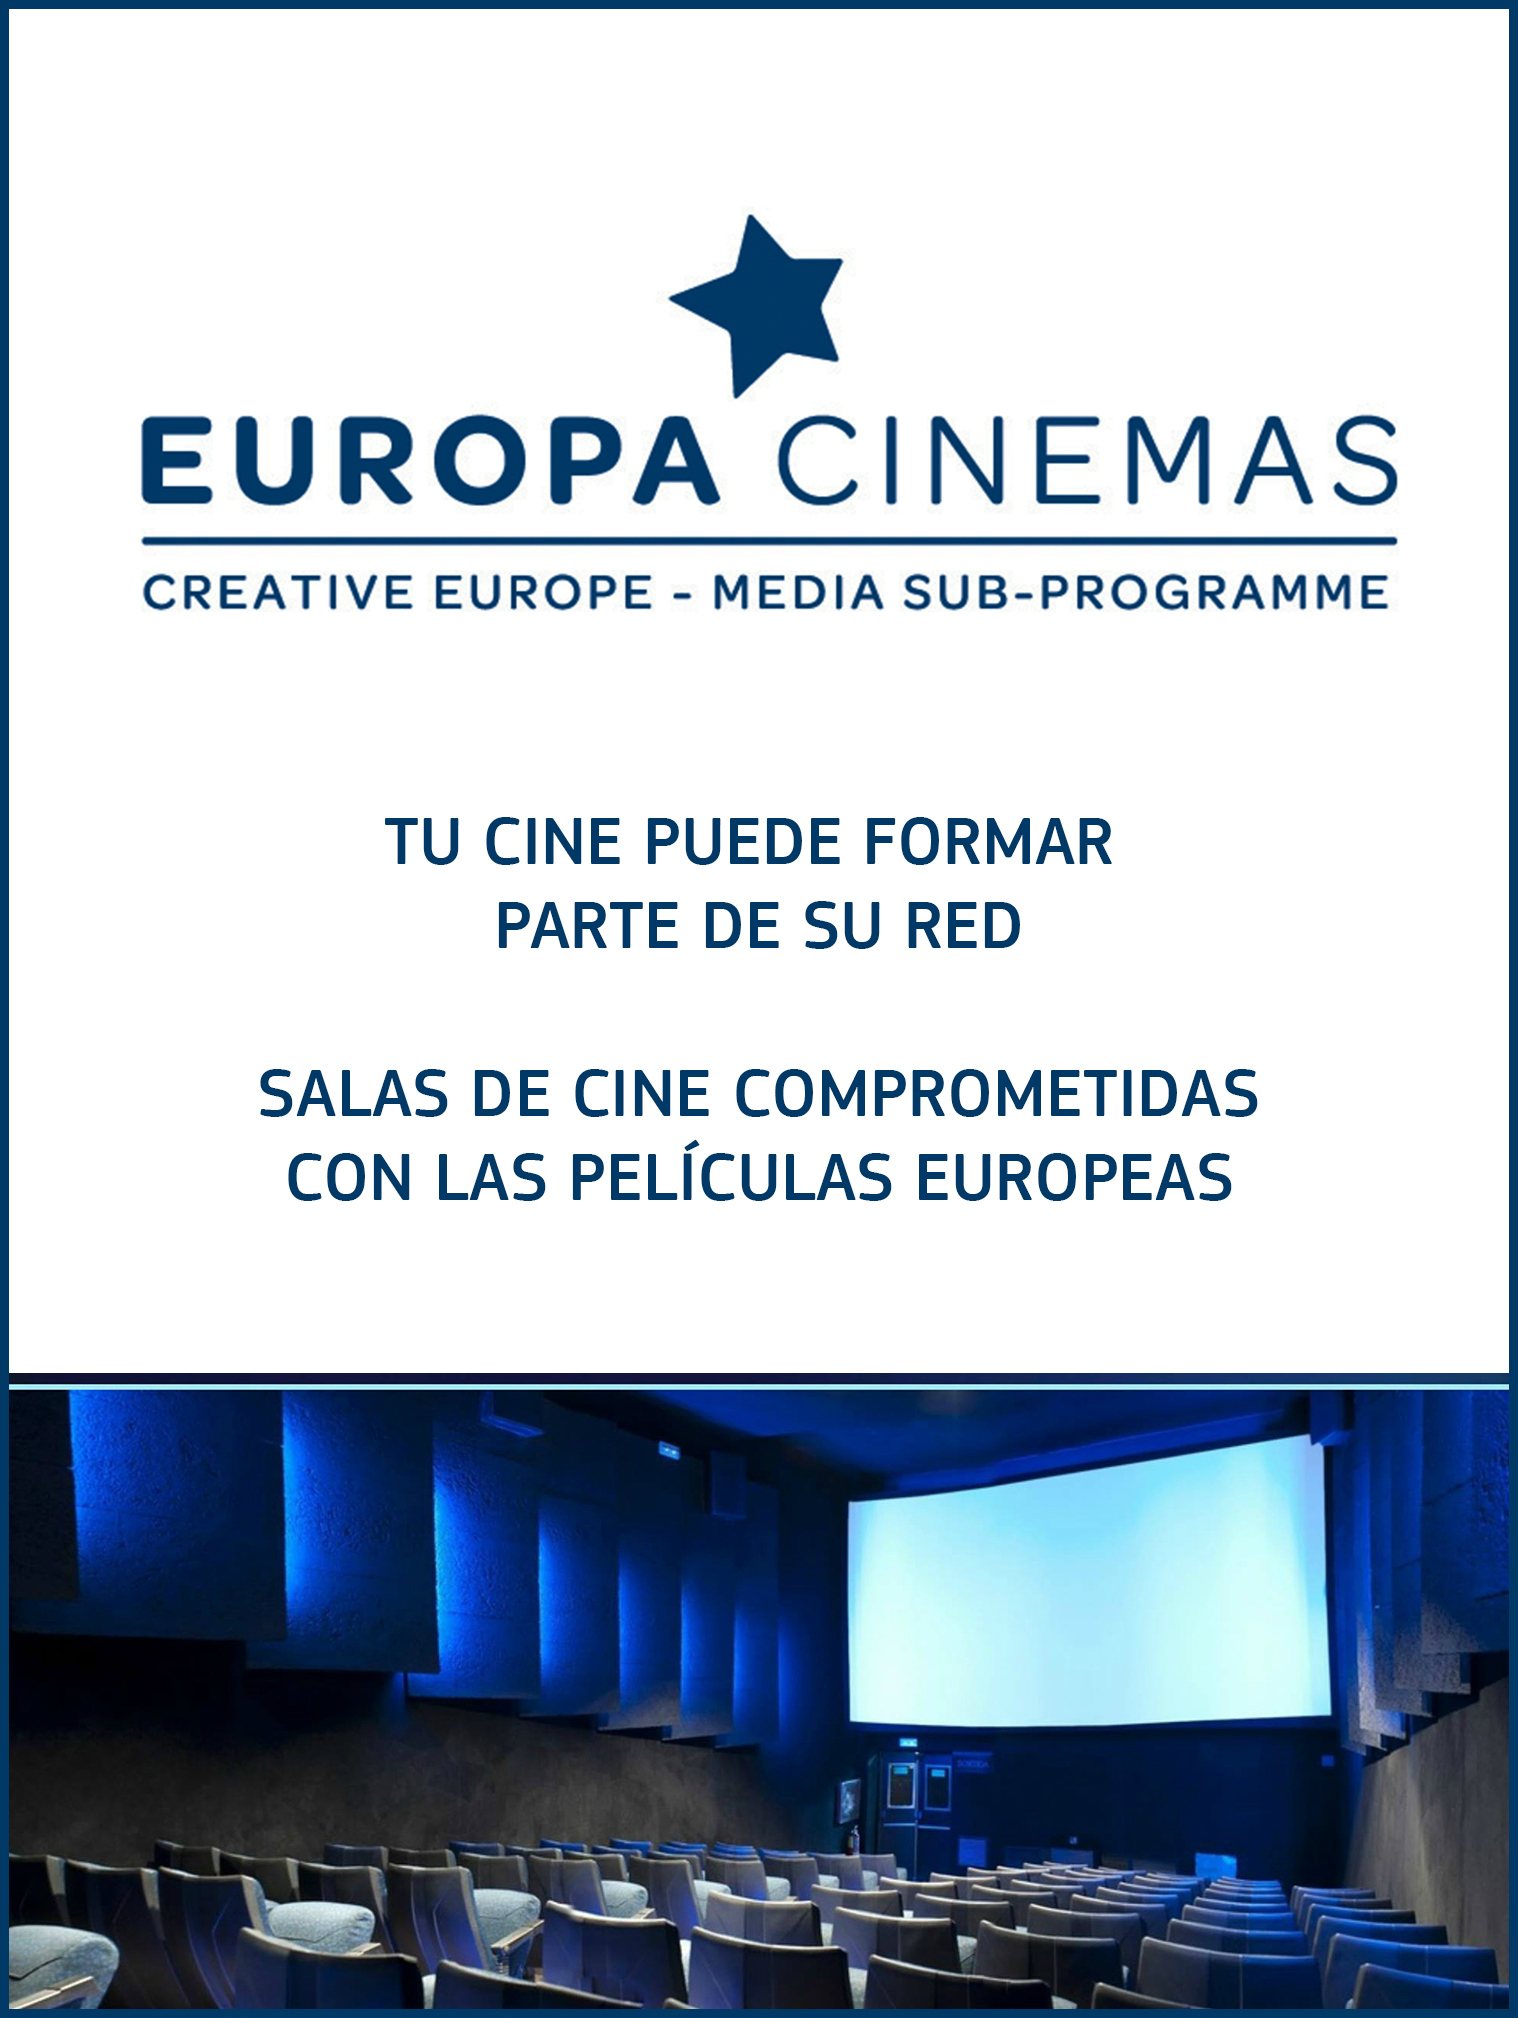 Europa Cinemas Interior 2017